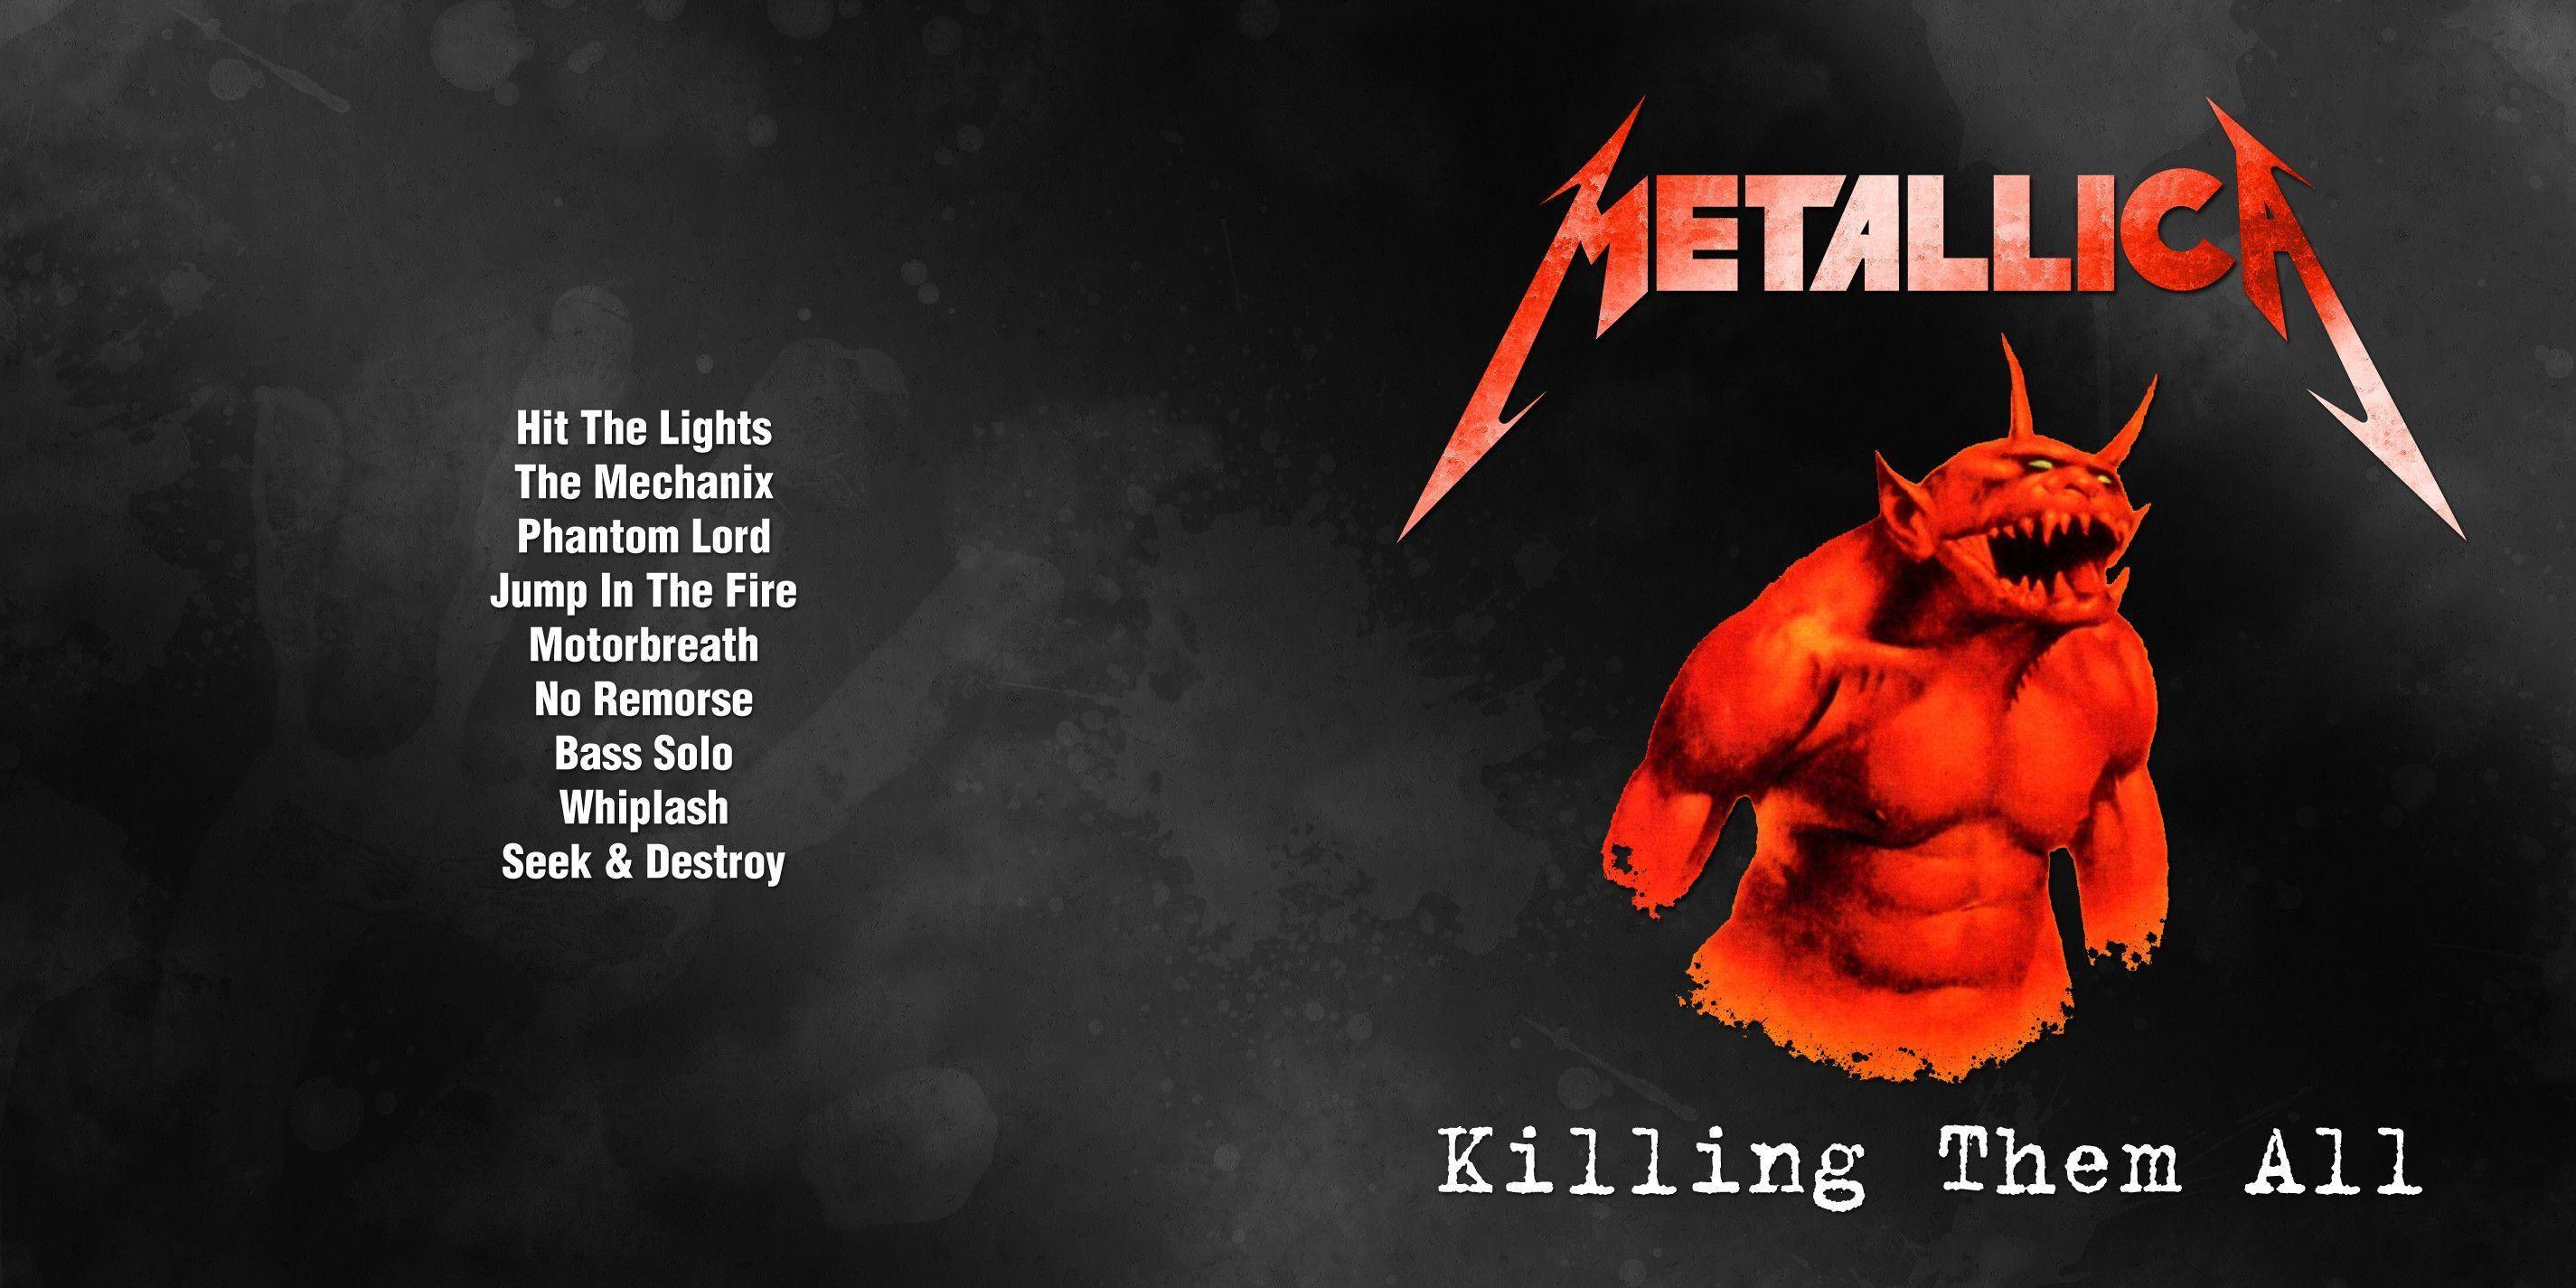 METALLICA thrash metal heavy album cover art poster posters dark